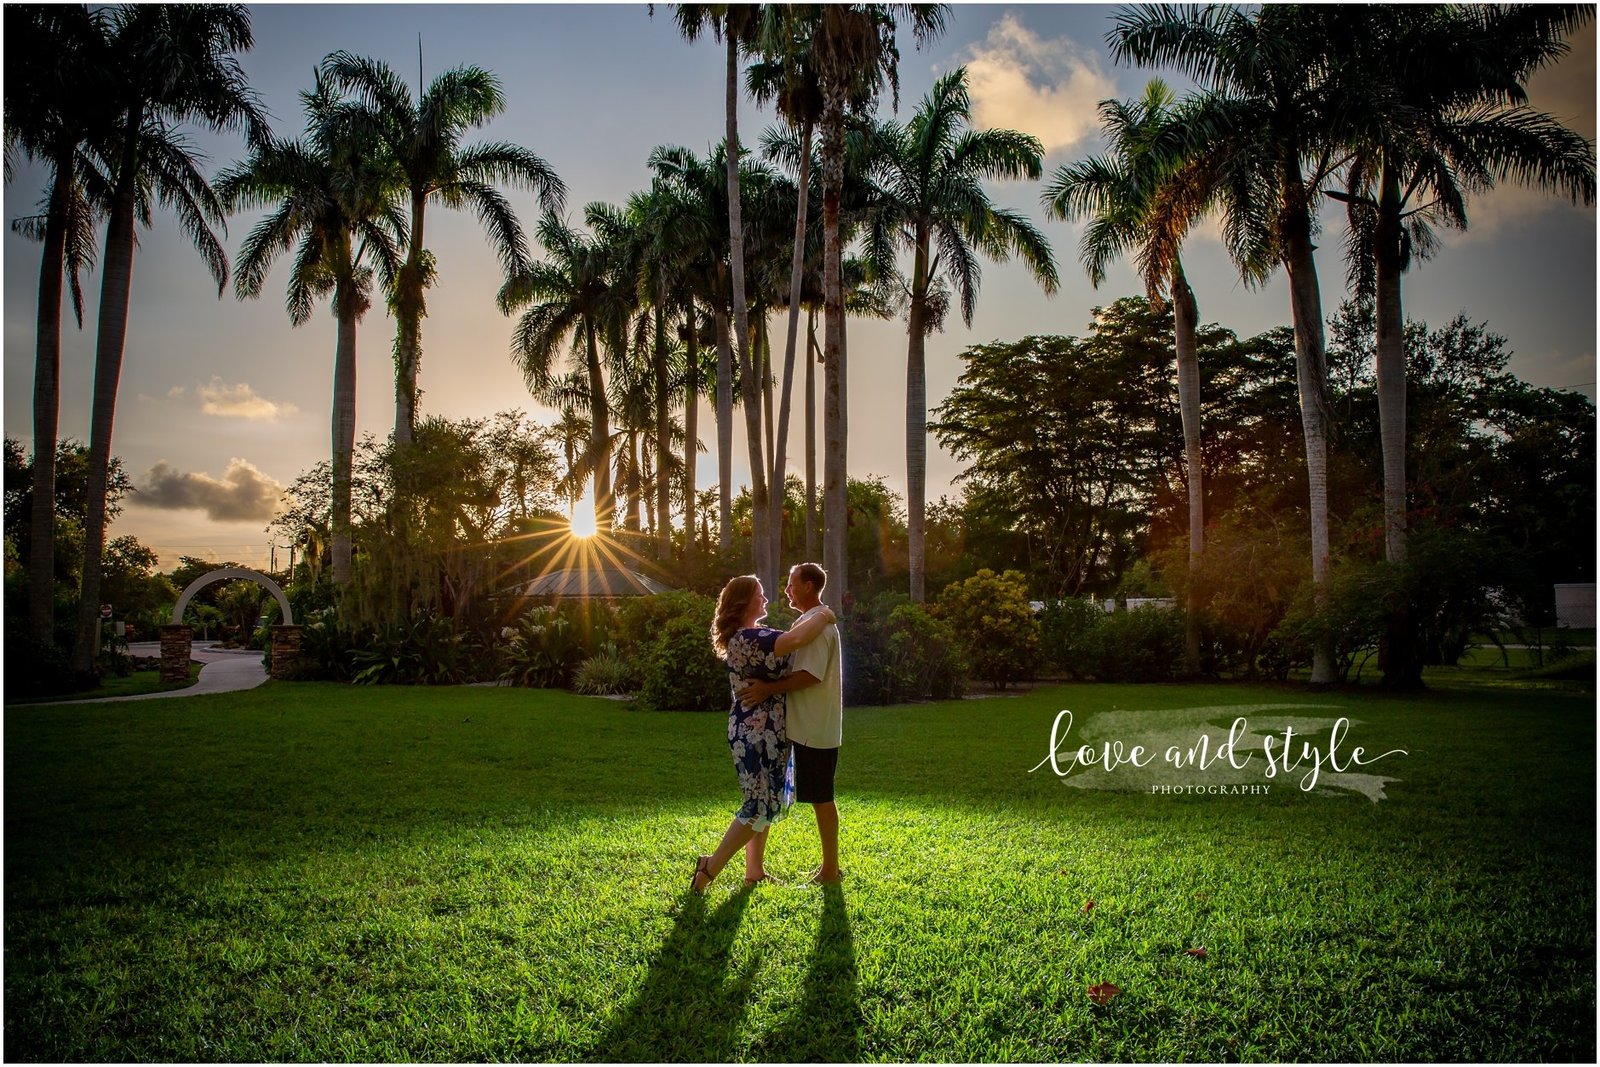 Engagement Photography at Palma Sola Botanical garden during sunset